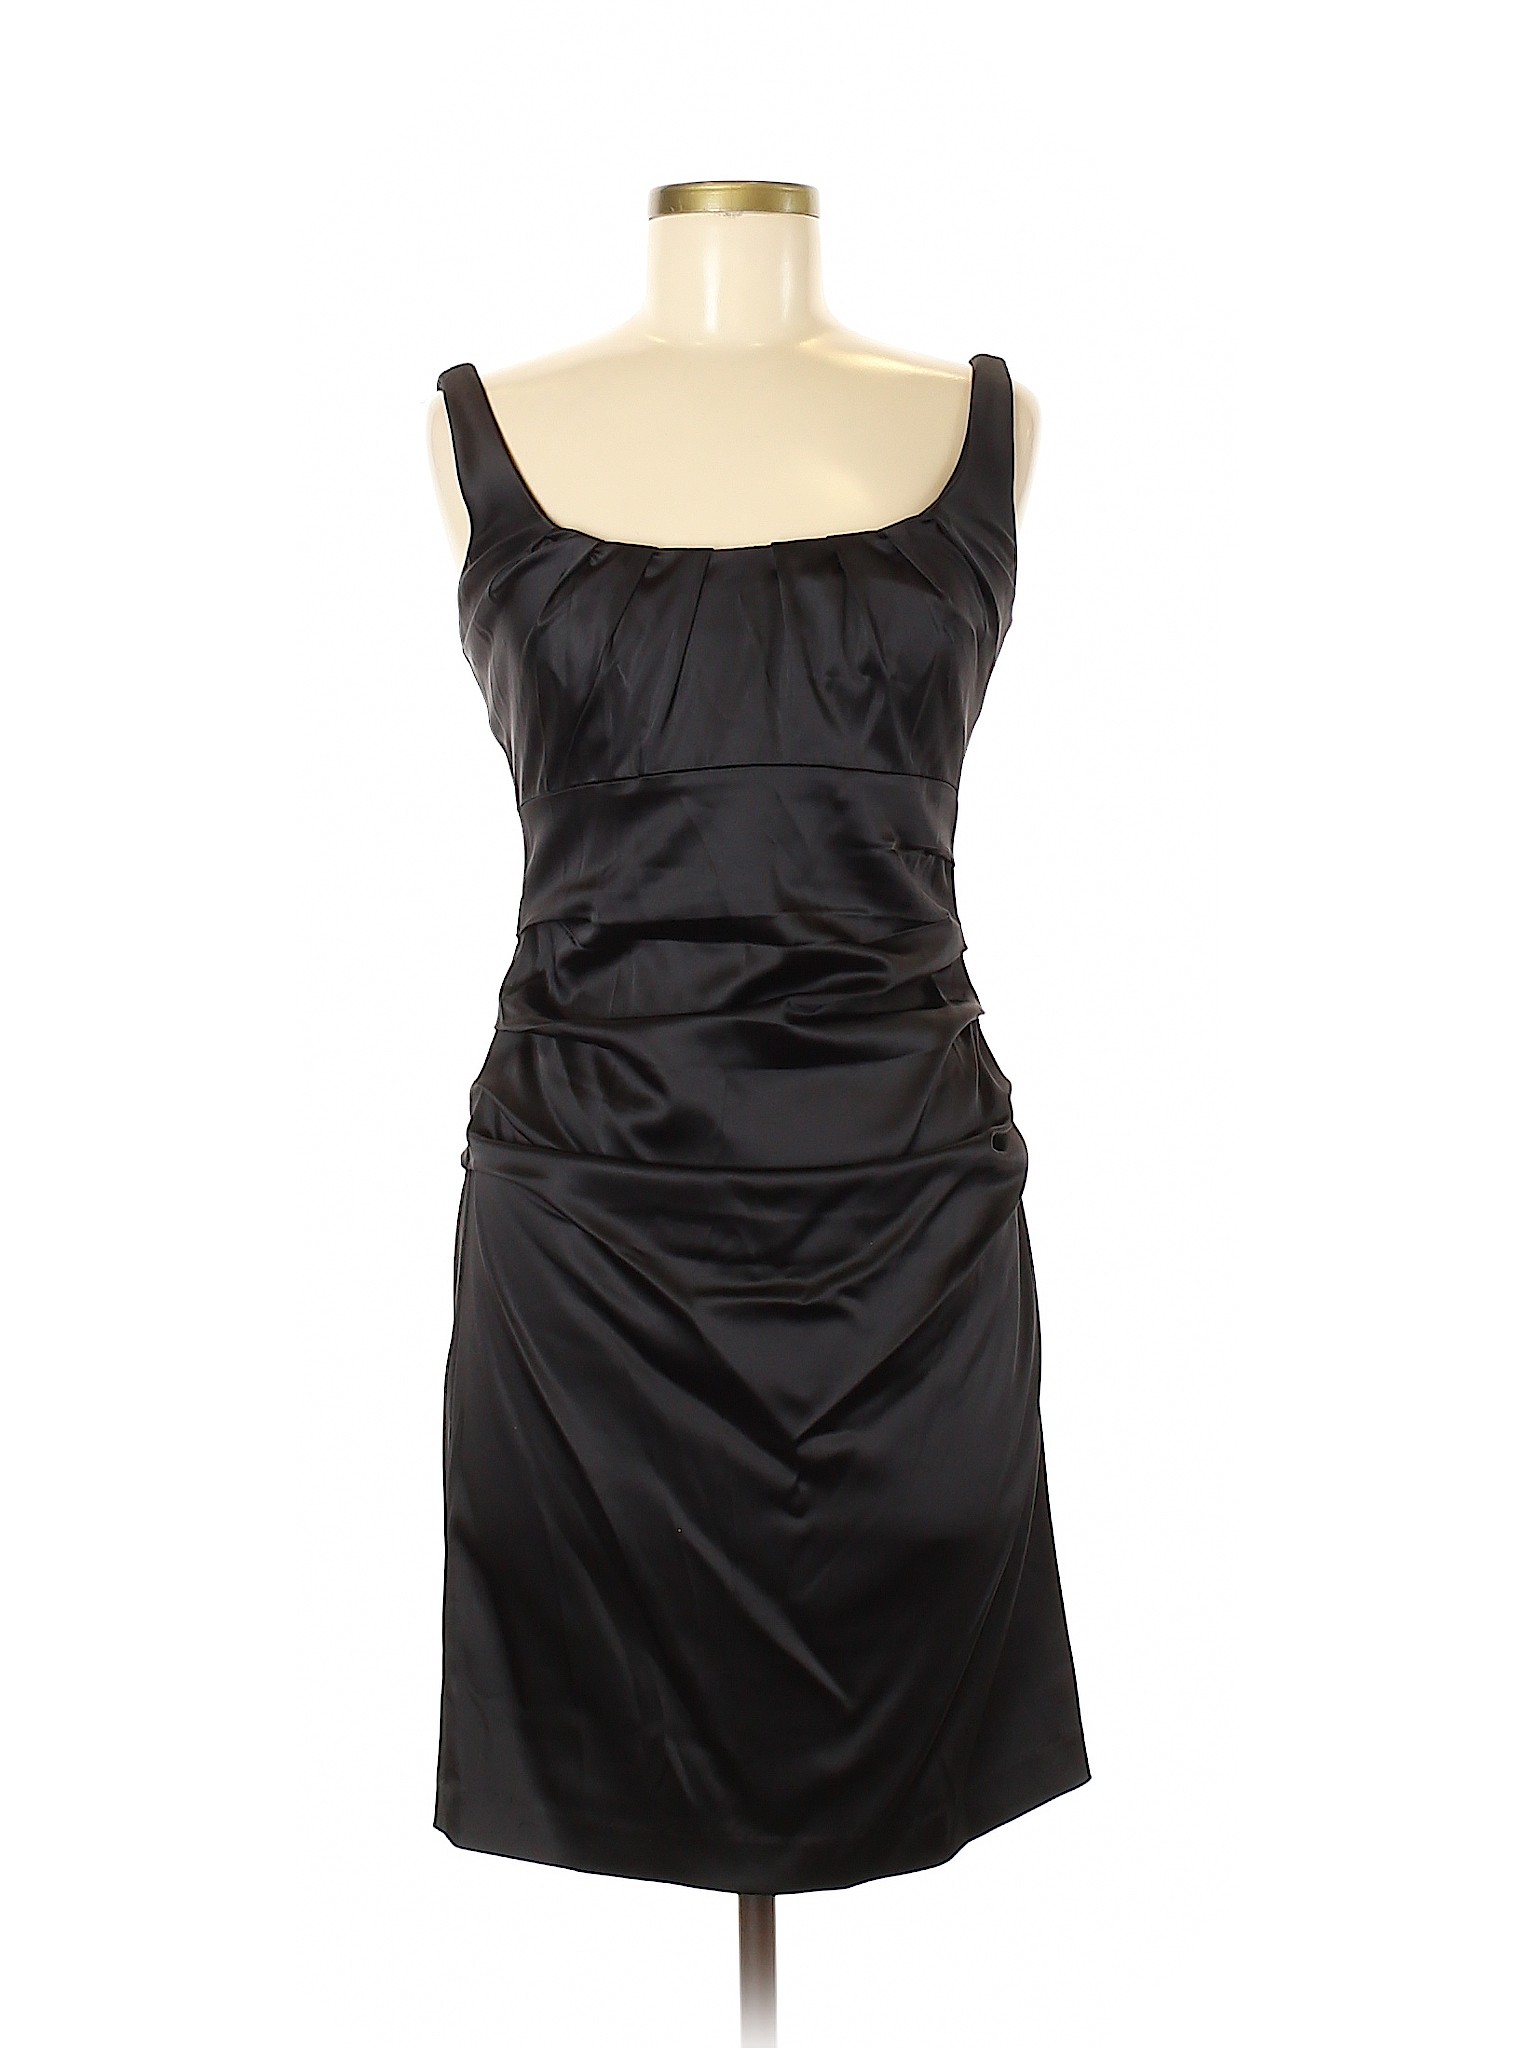 Suzi Chin For Maggy Boutique Women Black Cocktail Dress 8 | eBay